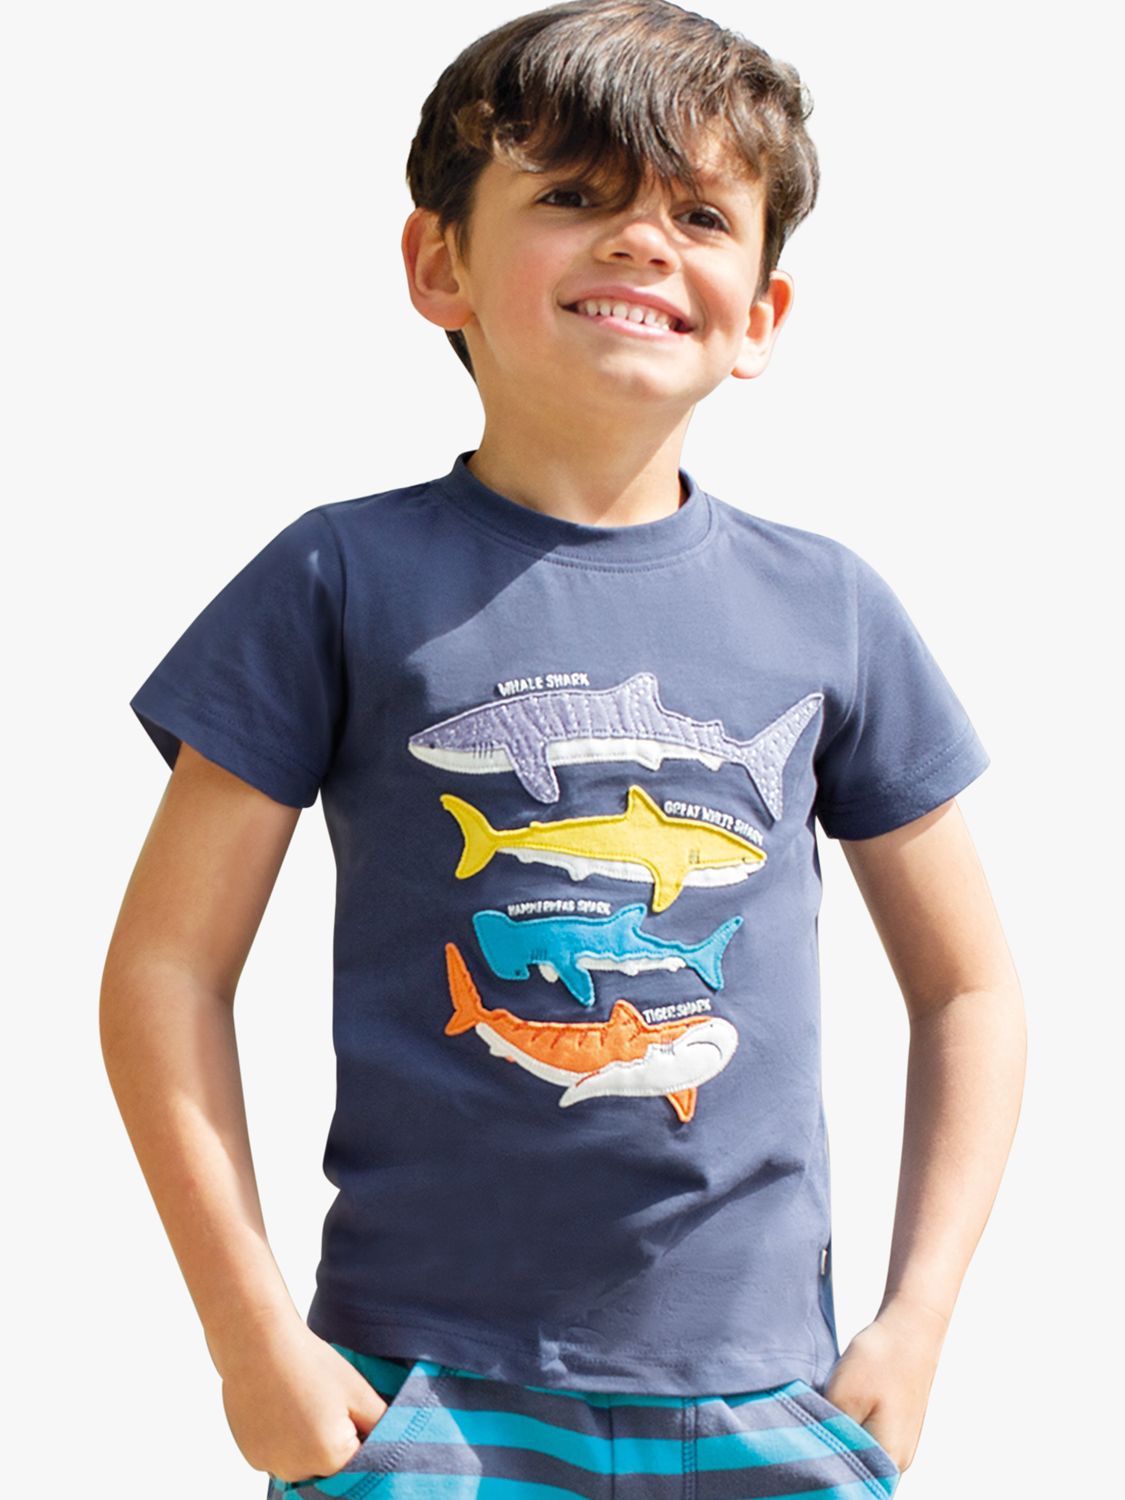 Frugi Kids' Avery Organic Cotton Shark Applique T-Shirt, Navy, 2-3 years